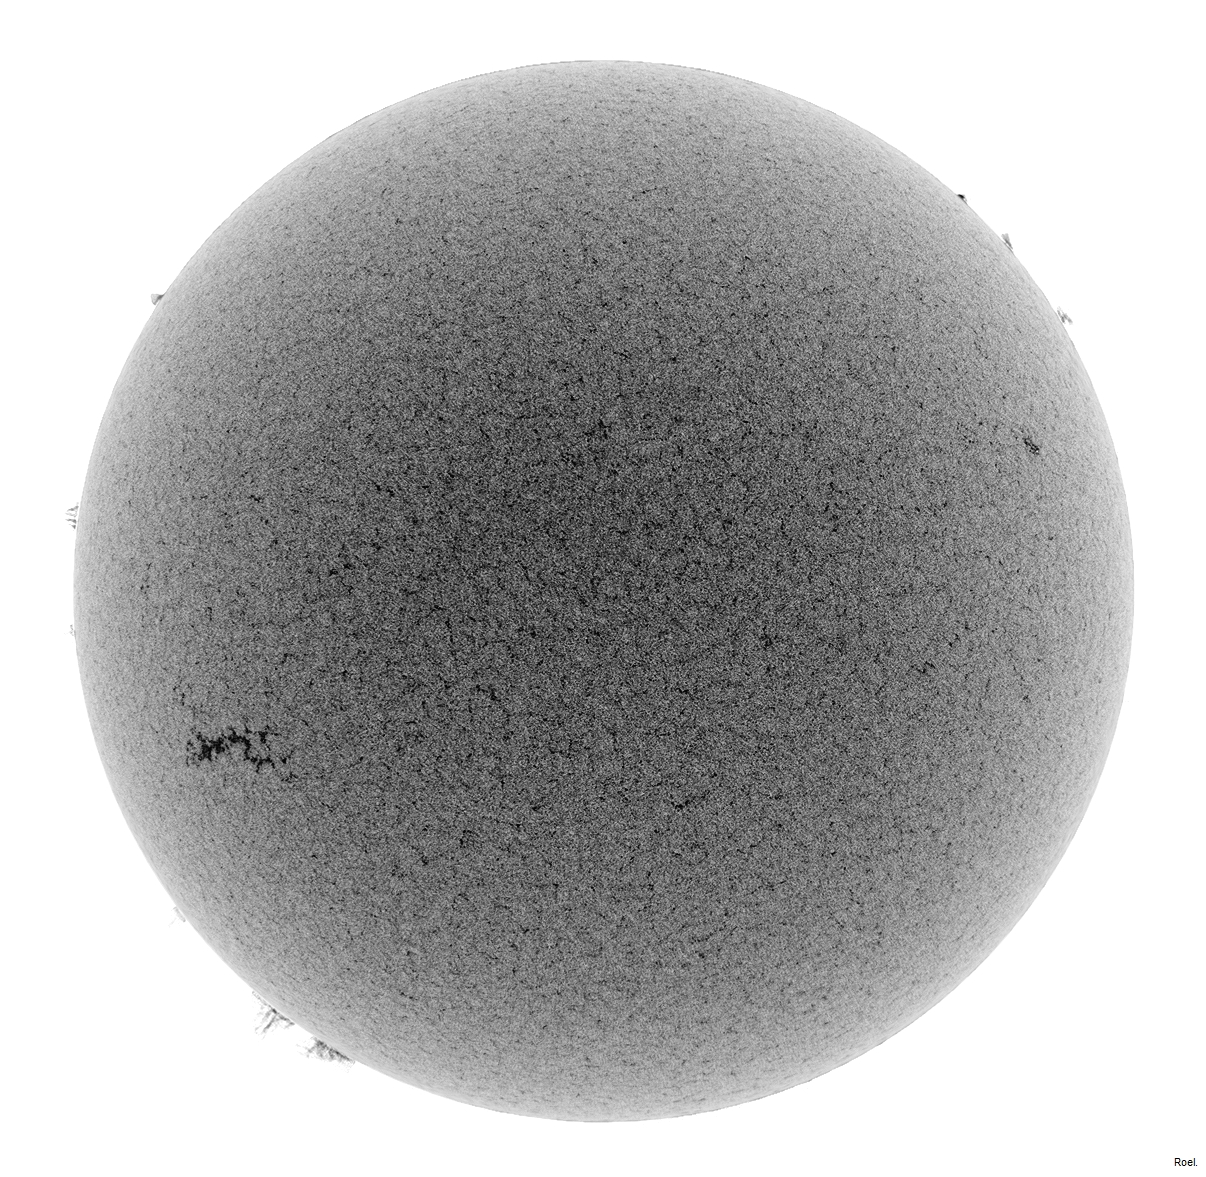 Sol del 31 de julio de 2018-Meade-CaK-PSTmod-1neg.jpg